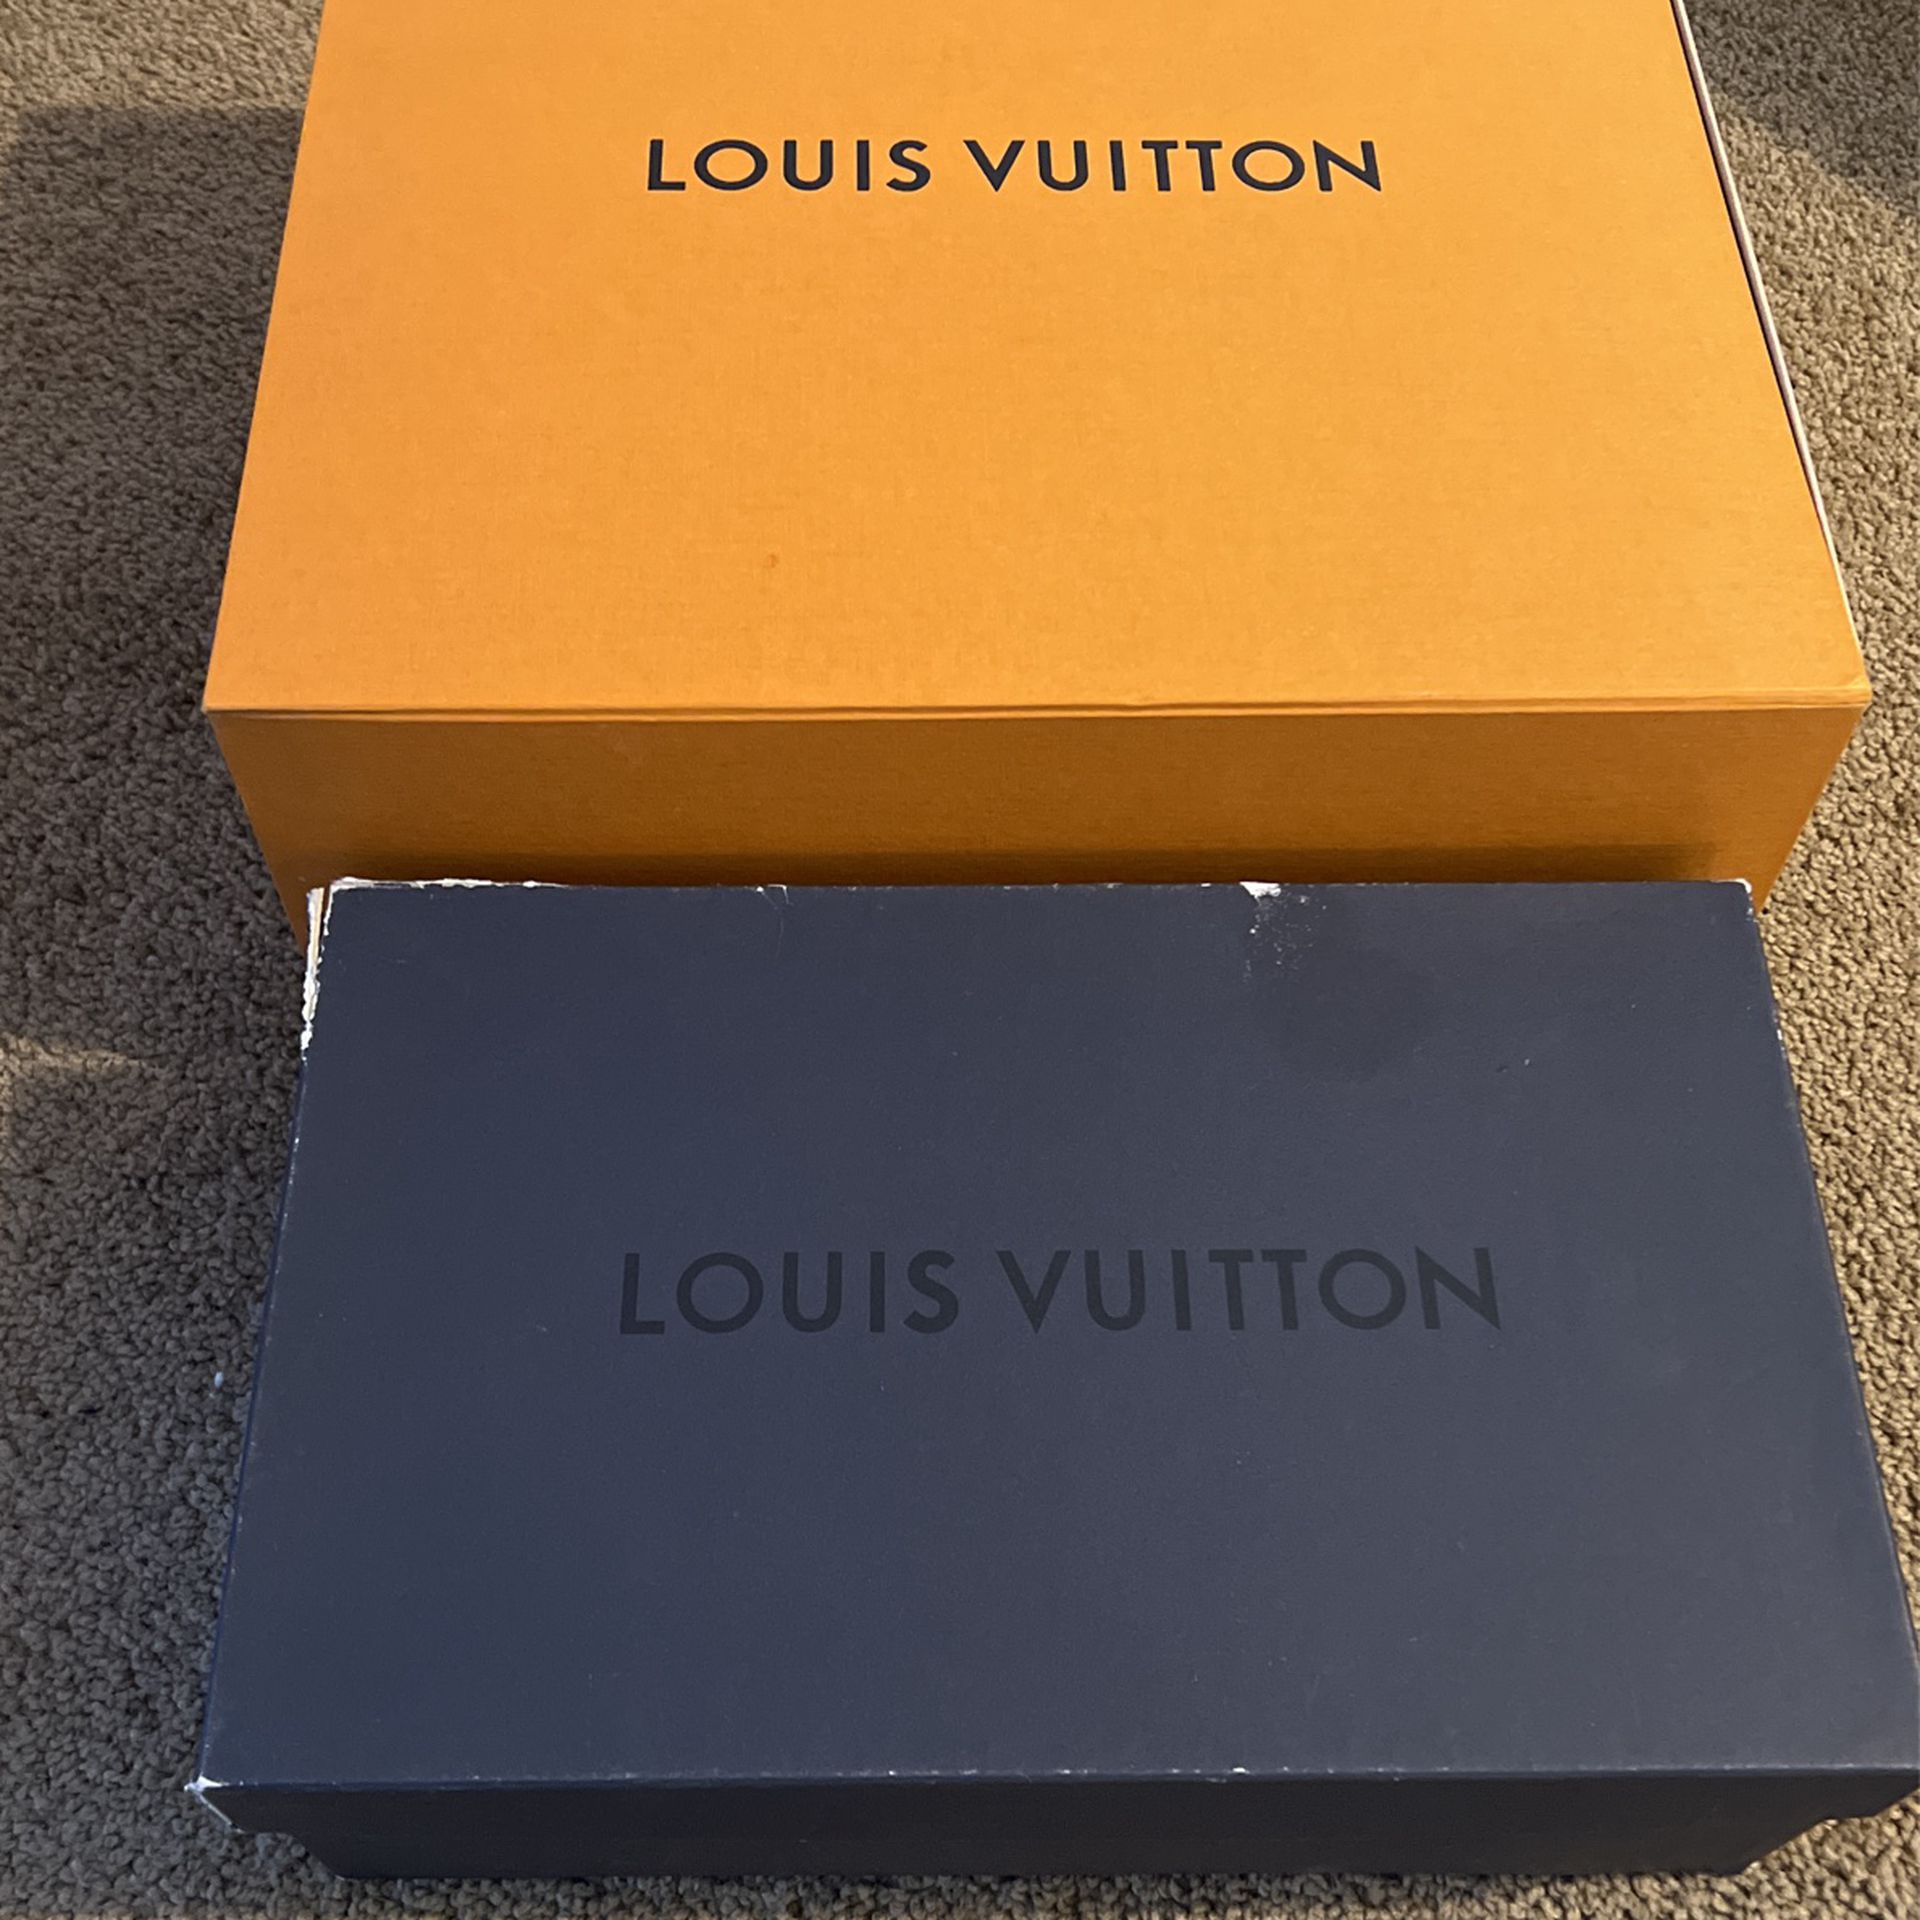 Louis Vuitton Sneaker